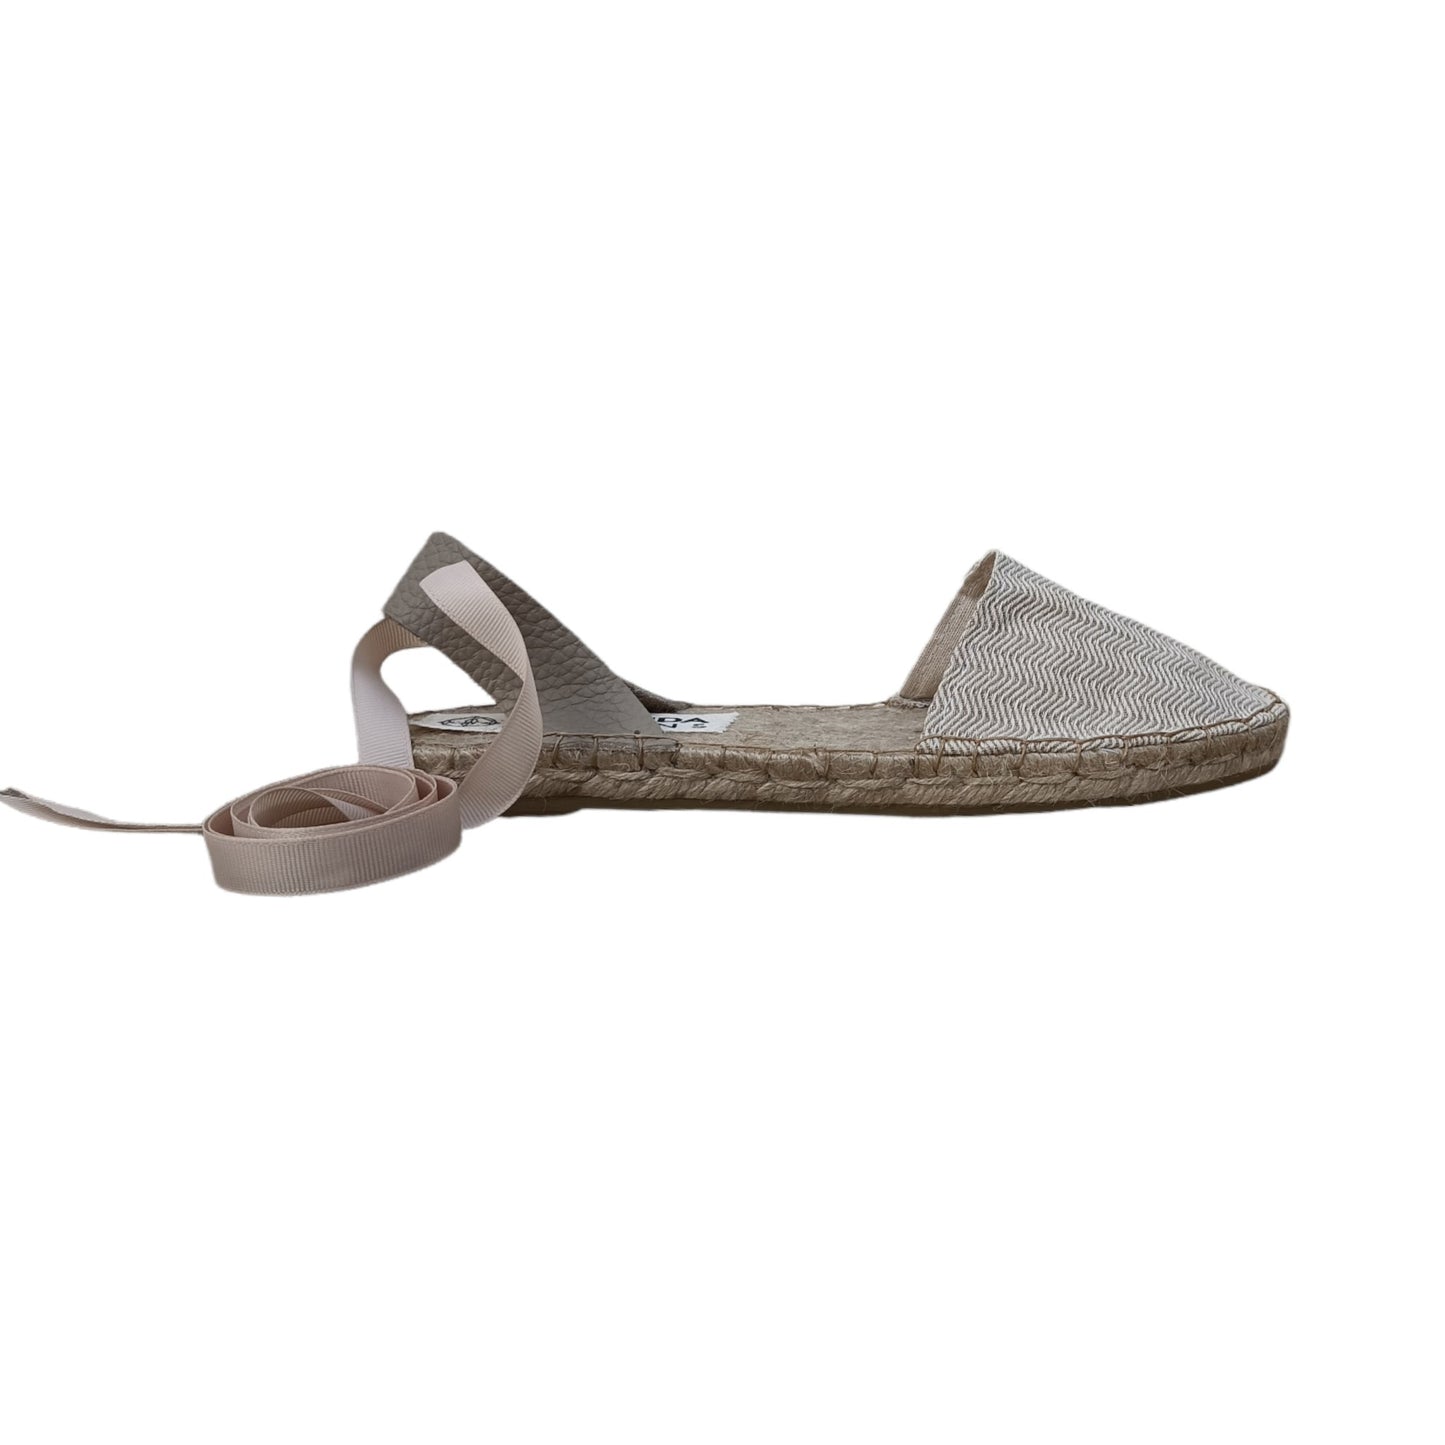 Herringbone Espadrilles - Beige - Classic sole